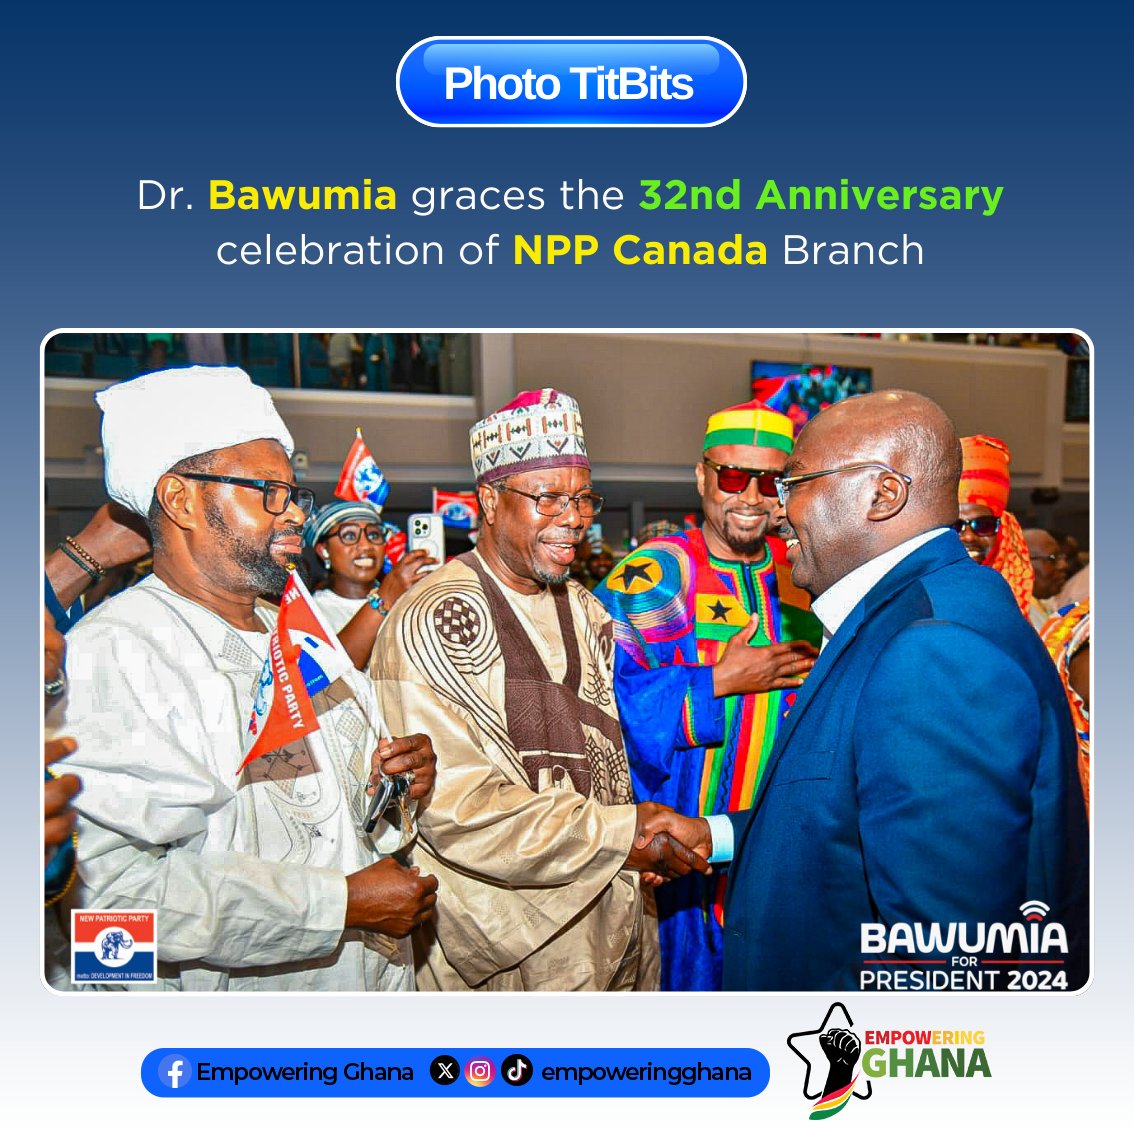 Dr. Bawumia graces the 32nd Anniversary celebration of NPP Canada Branch

#EmpoweringGhana #Ghana #Bawumia2024 #NationBuilding #NPP #FutureLeadership #Bawumia #BreakingThe8WithBawumia #GhanaNews

Freemason | KK Fosu | Circle | Fabrizio | Guru | #daterush | Godfred Dame